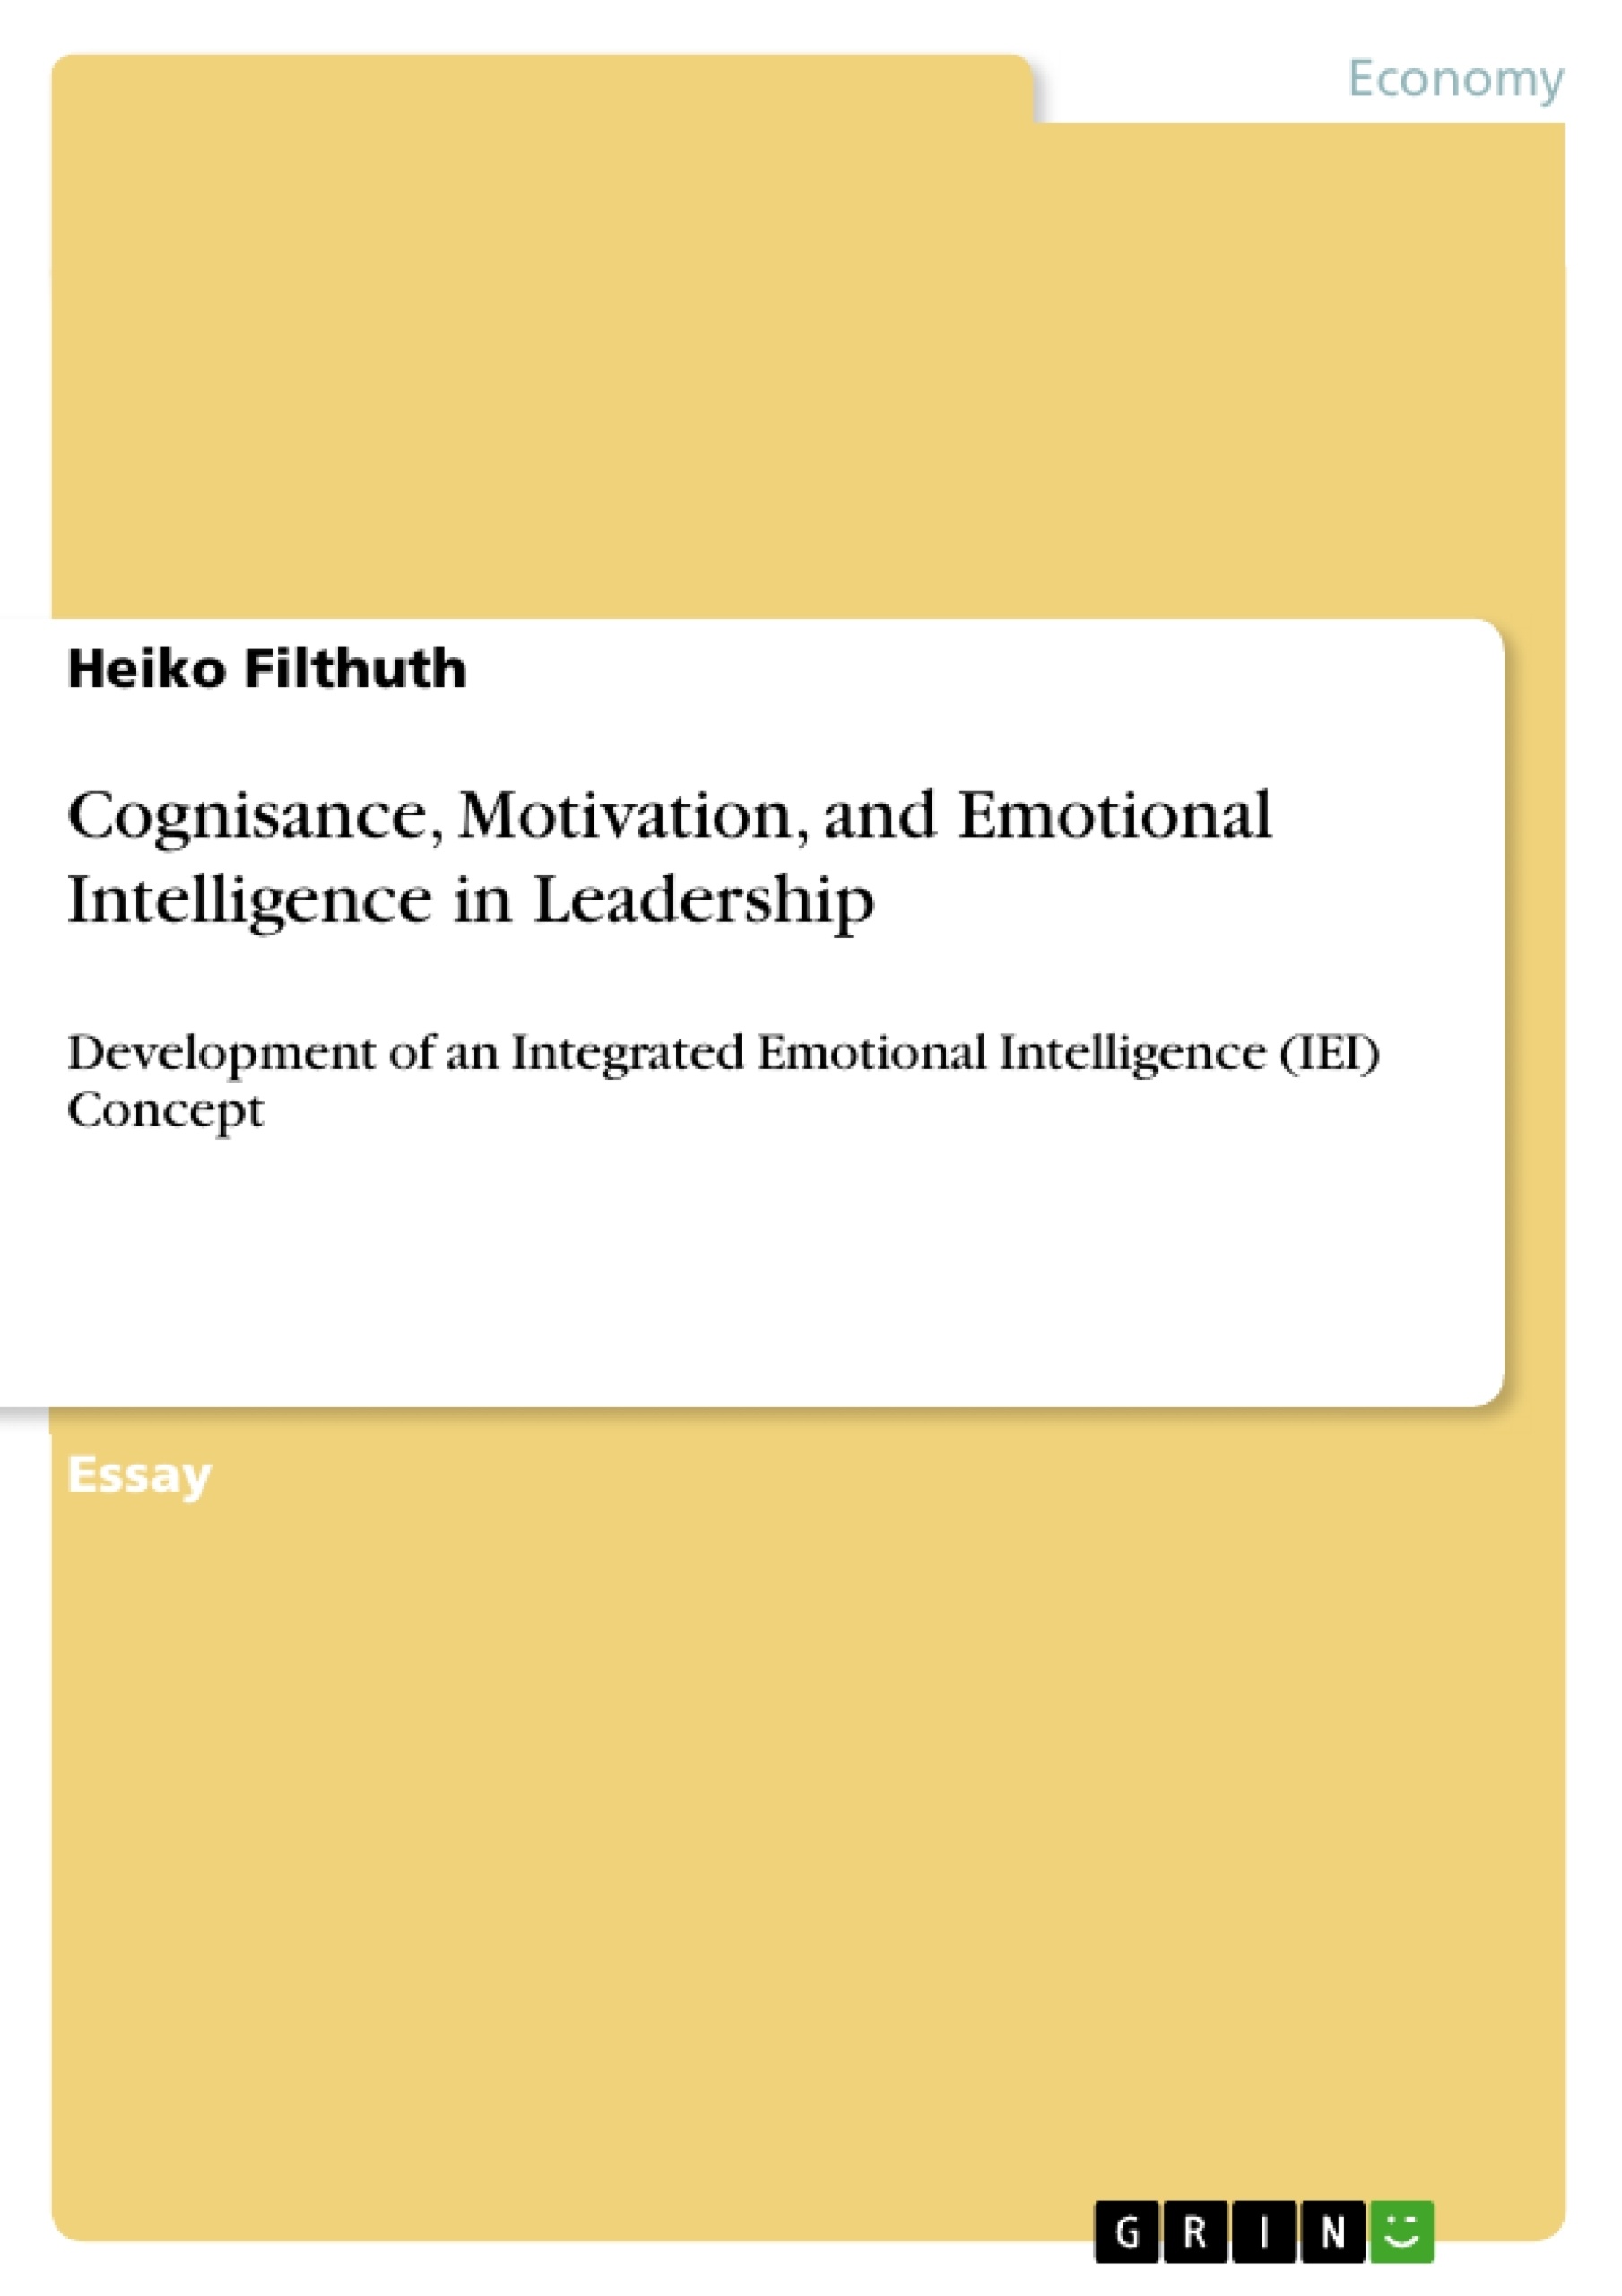 Title: Cognisance, Motivation, and Emotional Intelligence in Leadership